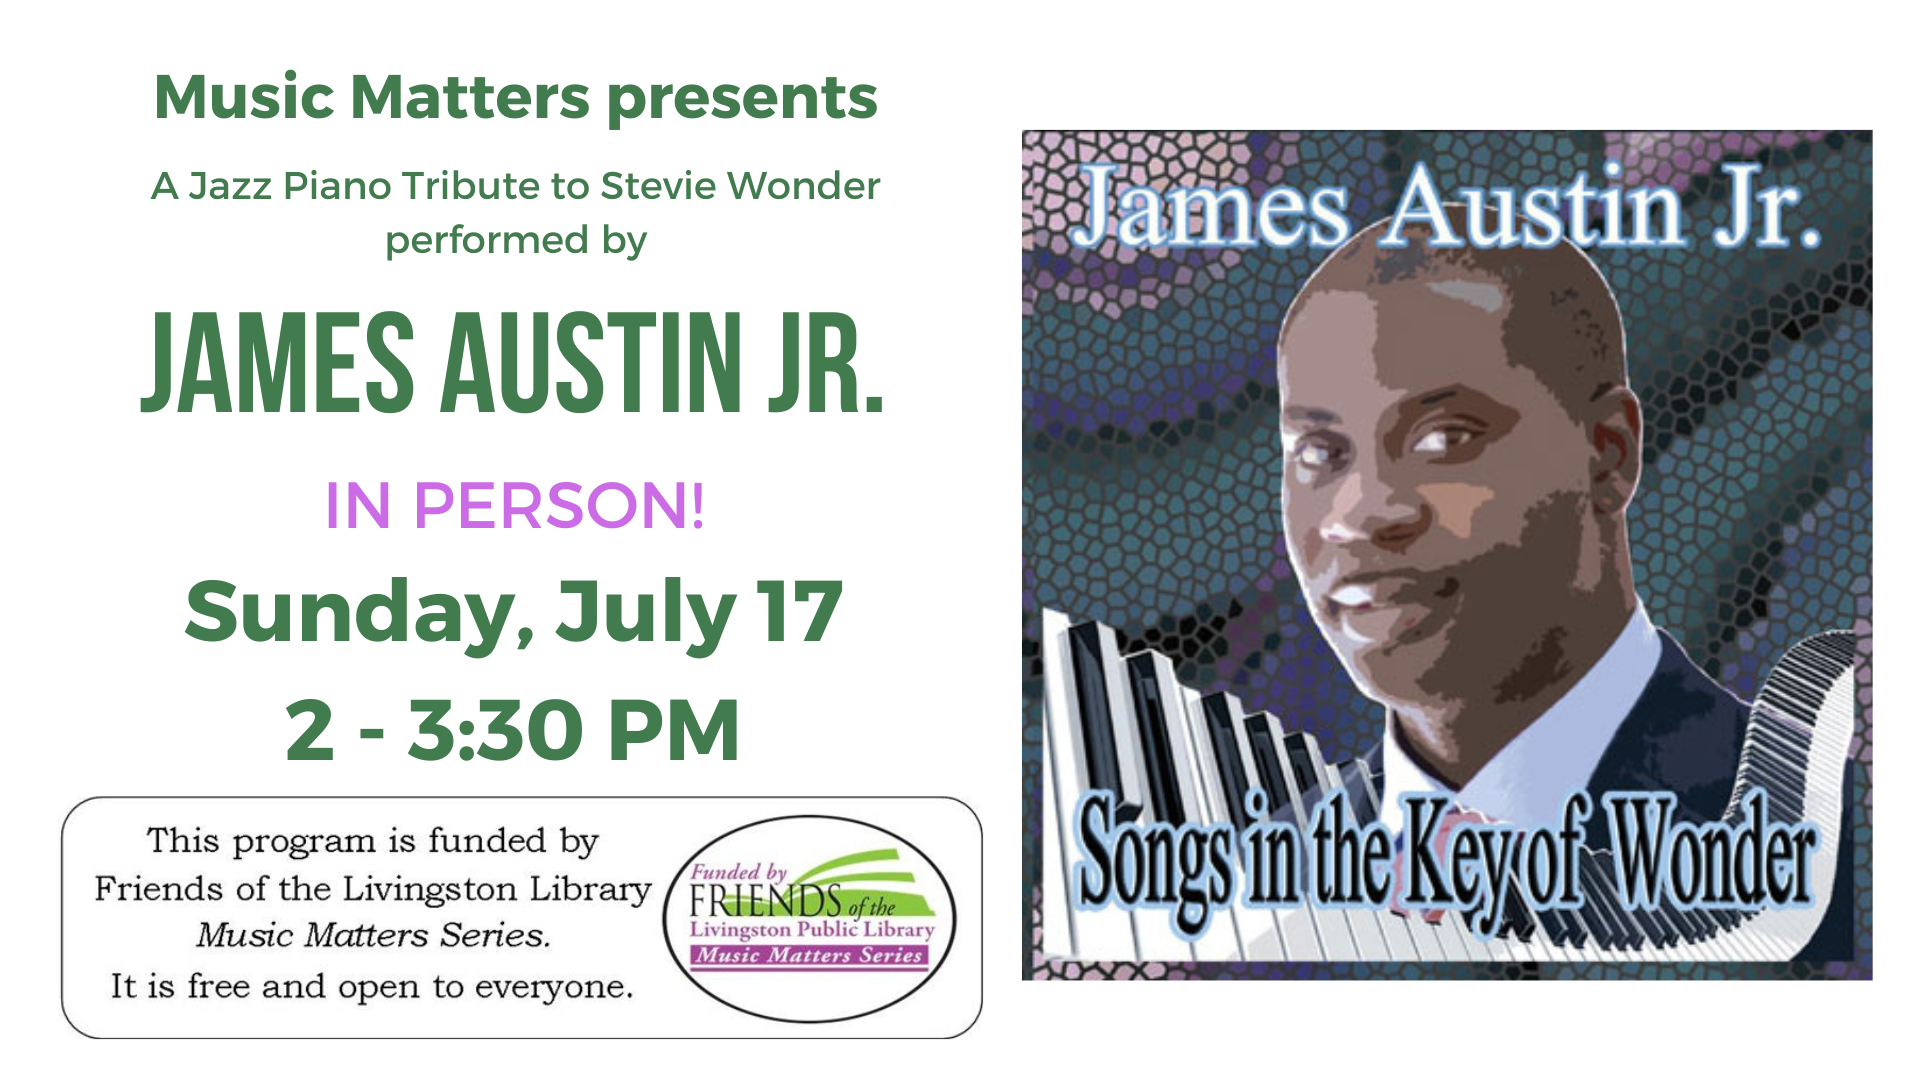 Banner advertising James Austin Jr.'s jazz piano tribute to Stevie Wonder